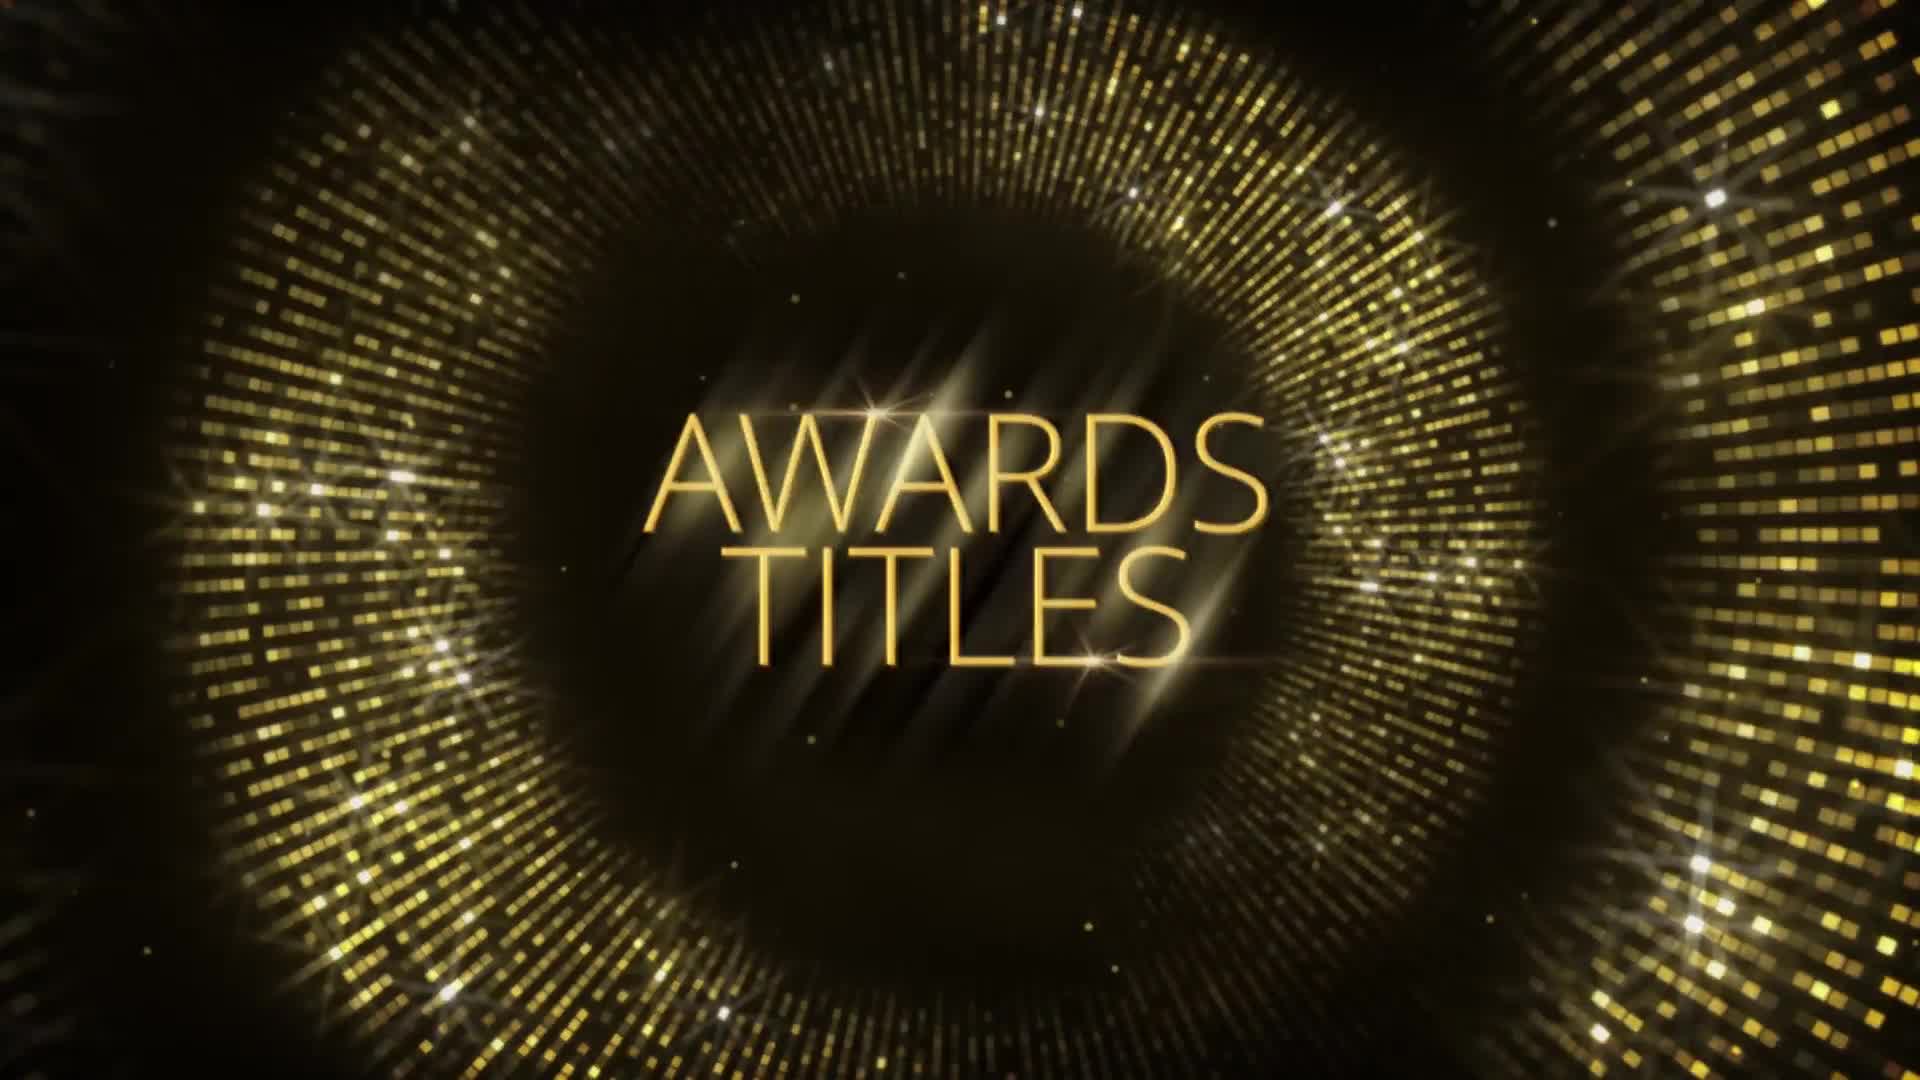 Awards Titles DaVinci Resolve Videohive 30723741 DaVinci Resolve Image 8